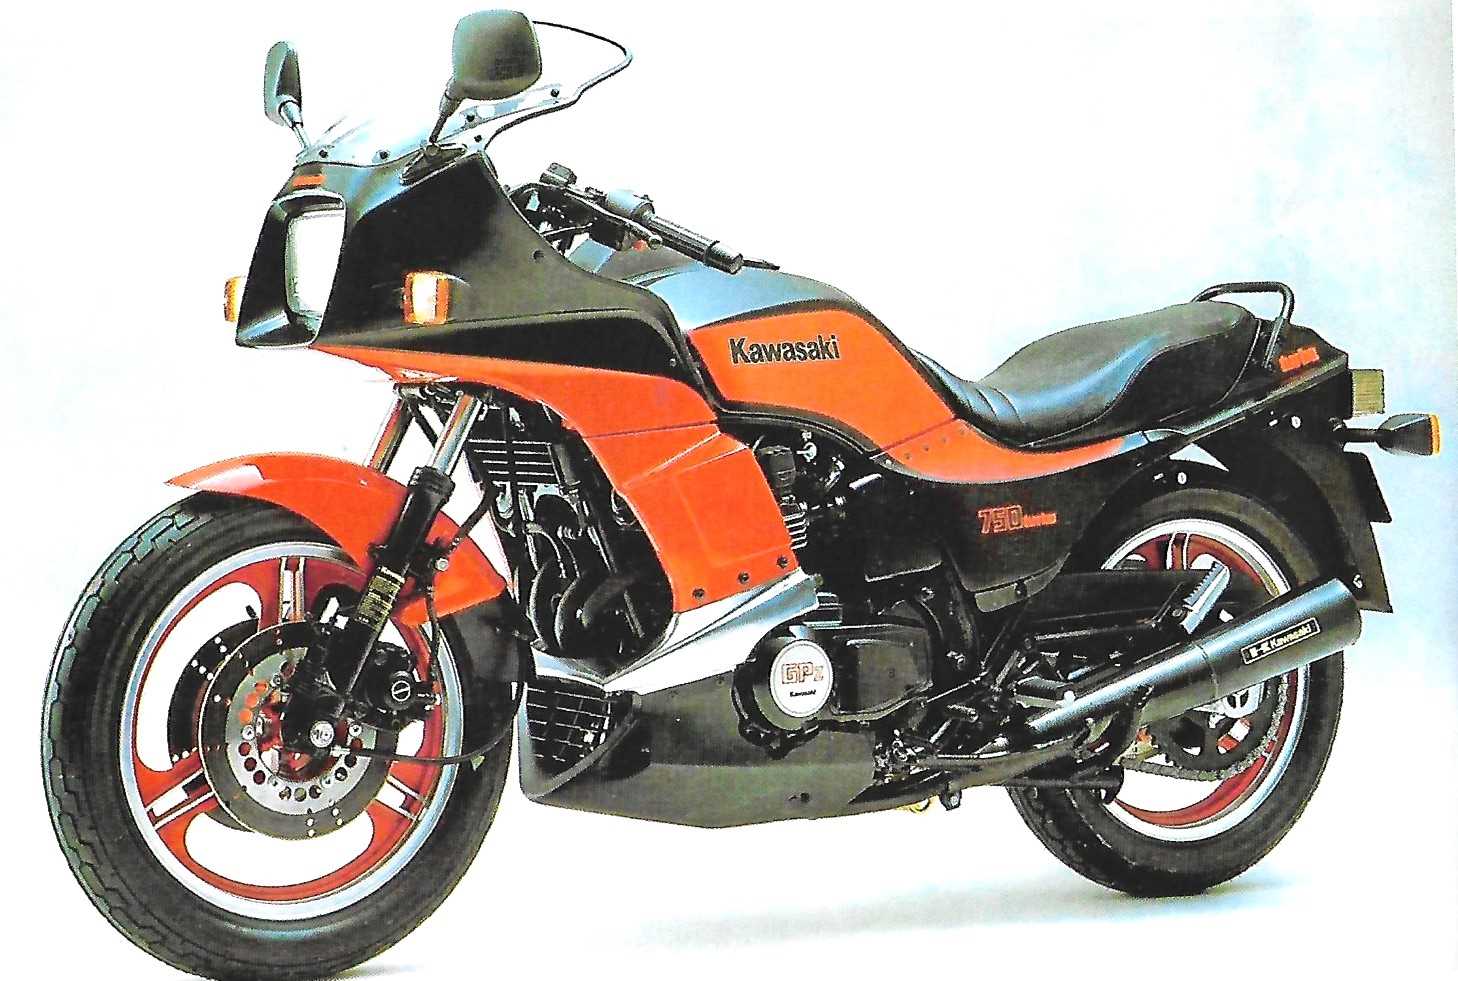 Kawasaki Gpz750 turbo